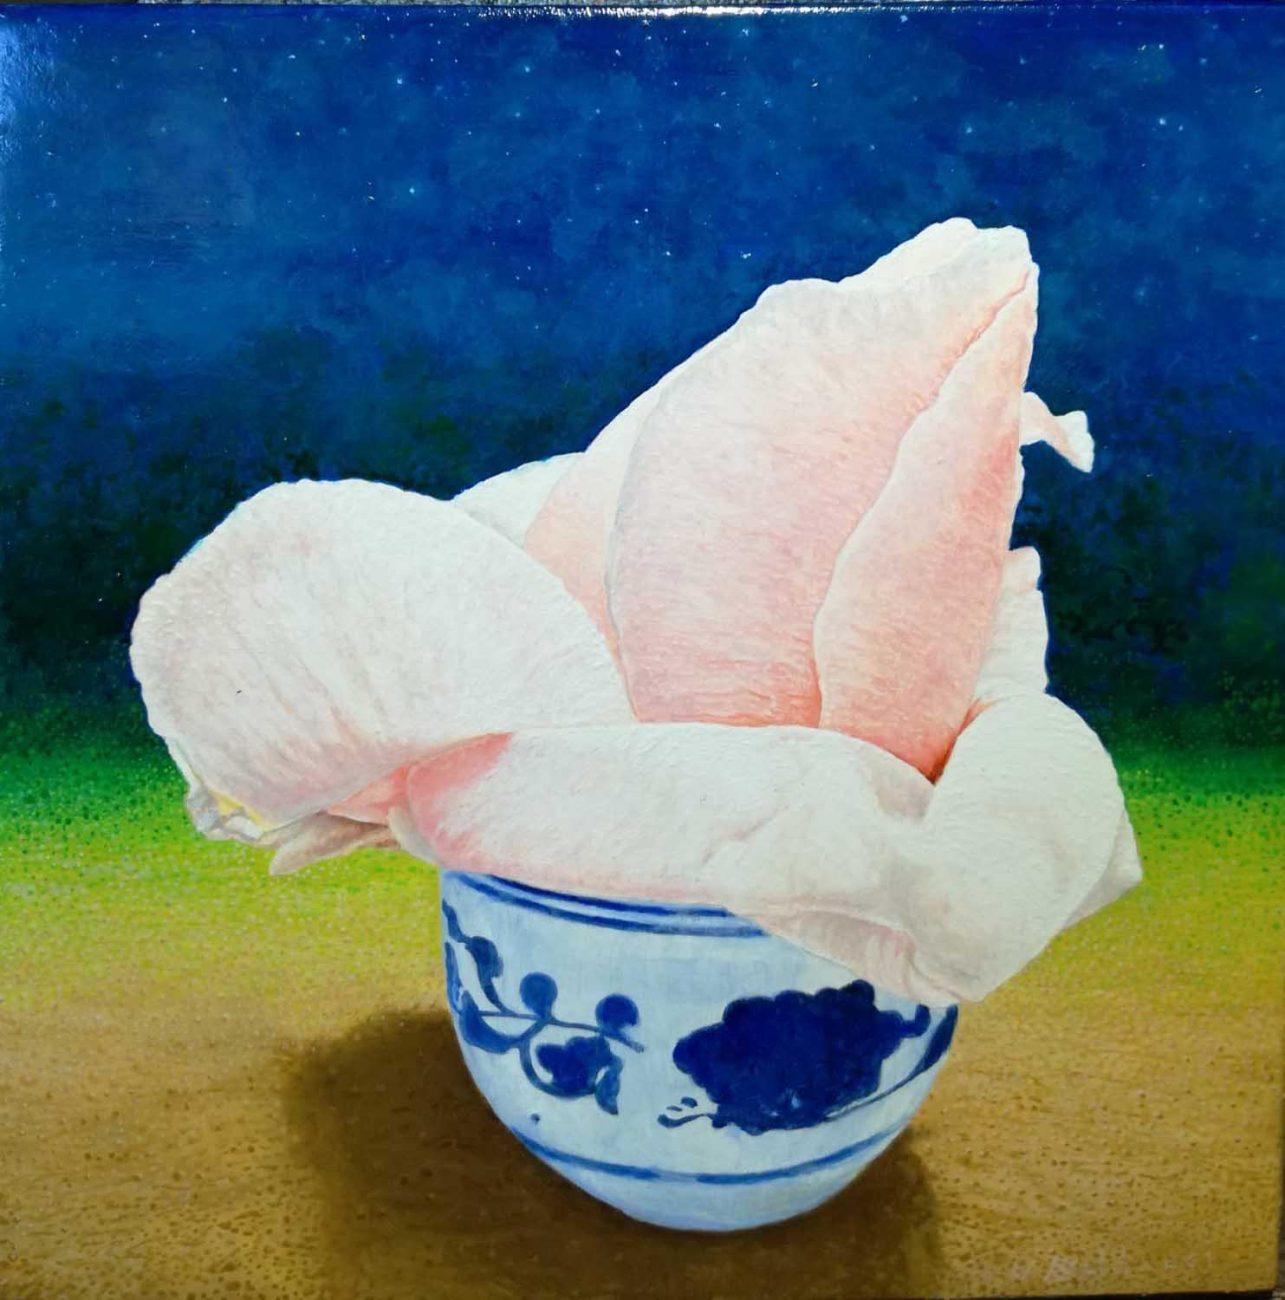 BALDA0030 La rosa bianca olio su tavola cm 15x15 - 2020